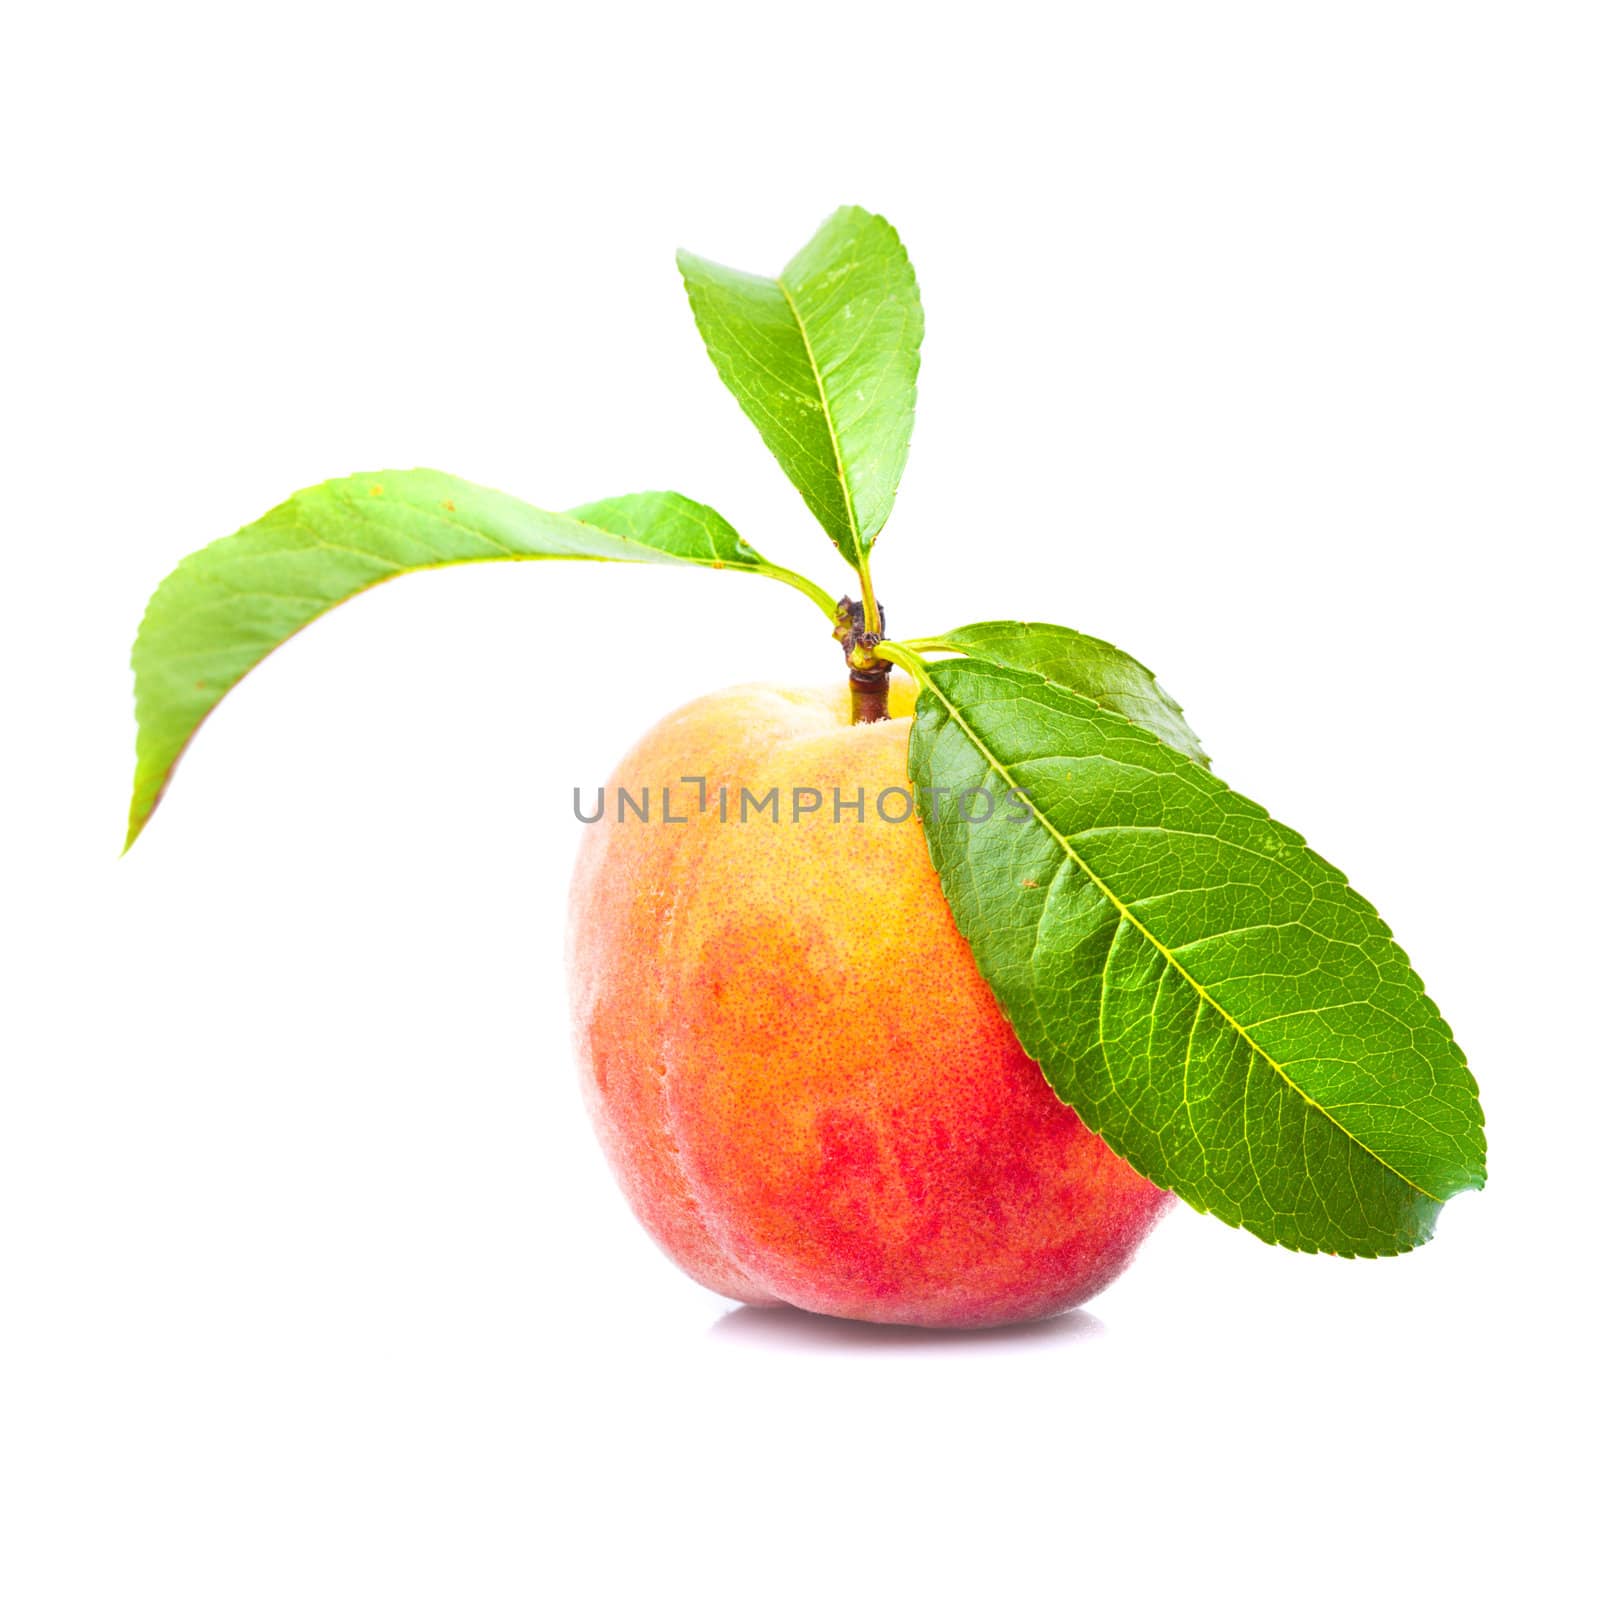 One peach by oksix